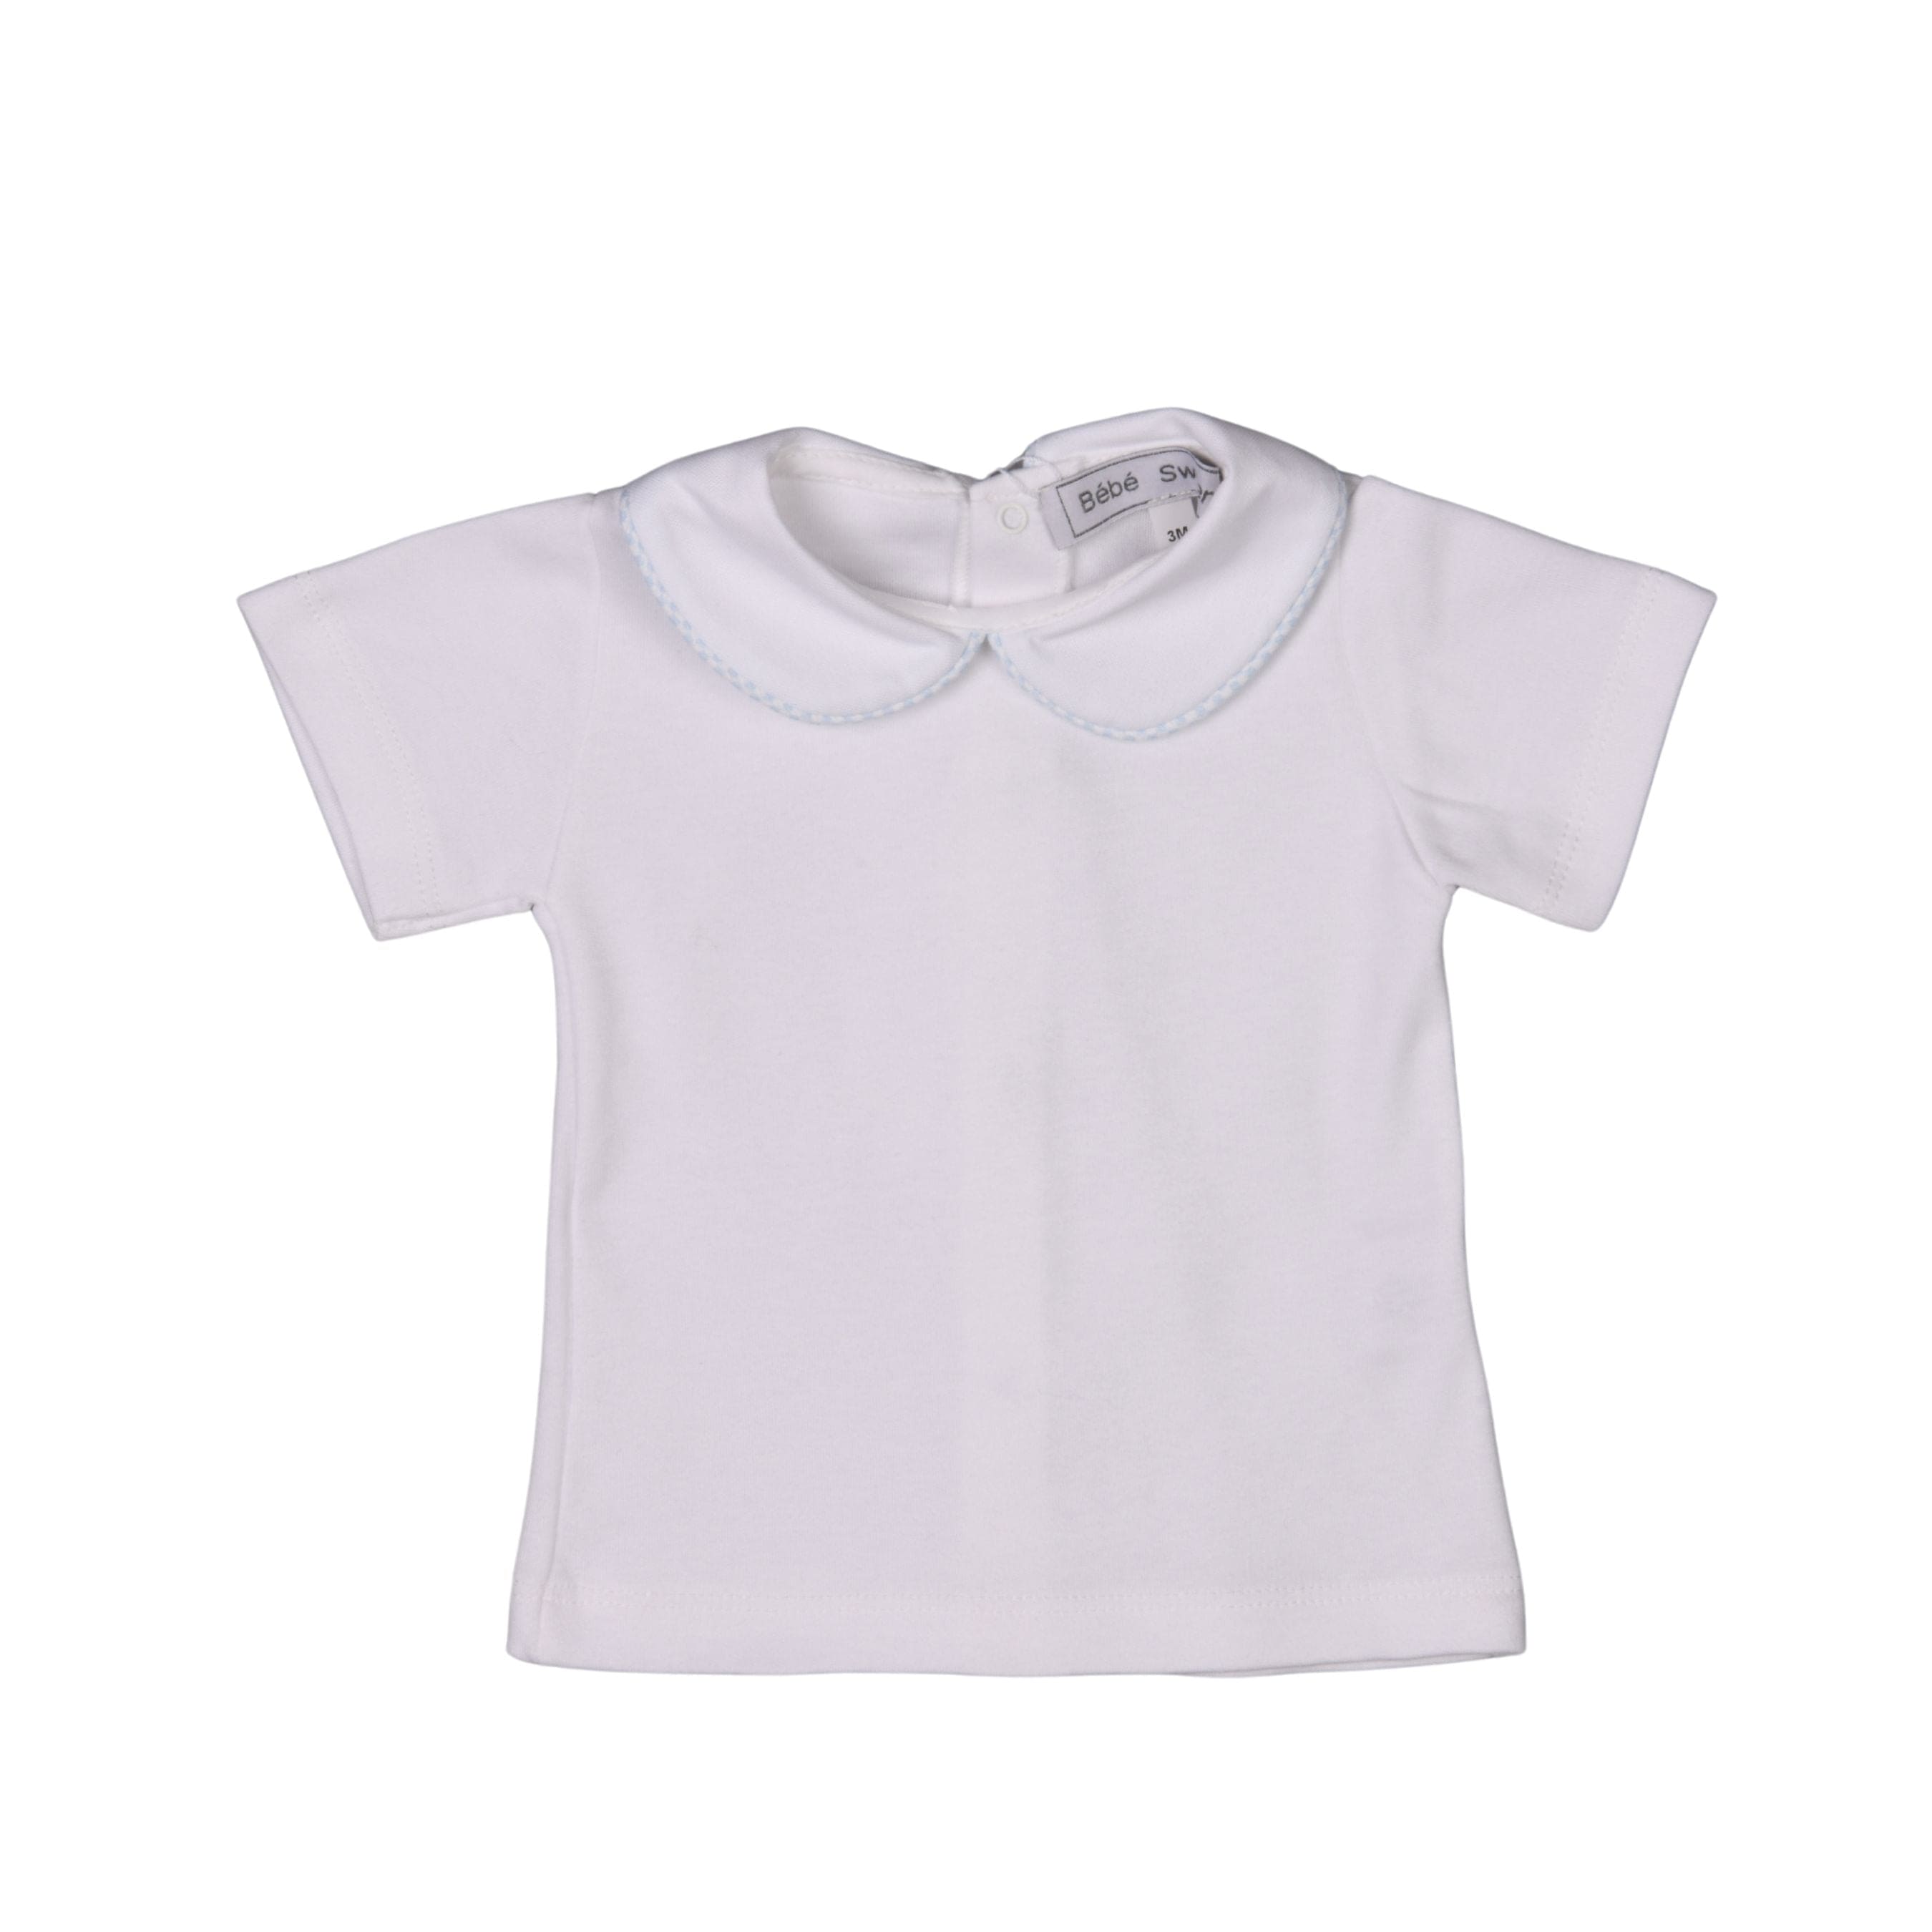 Lucas | Boys White & Blue Gingham Cotton T-shirt